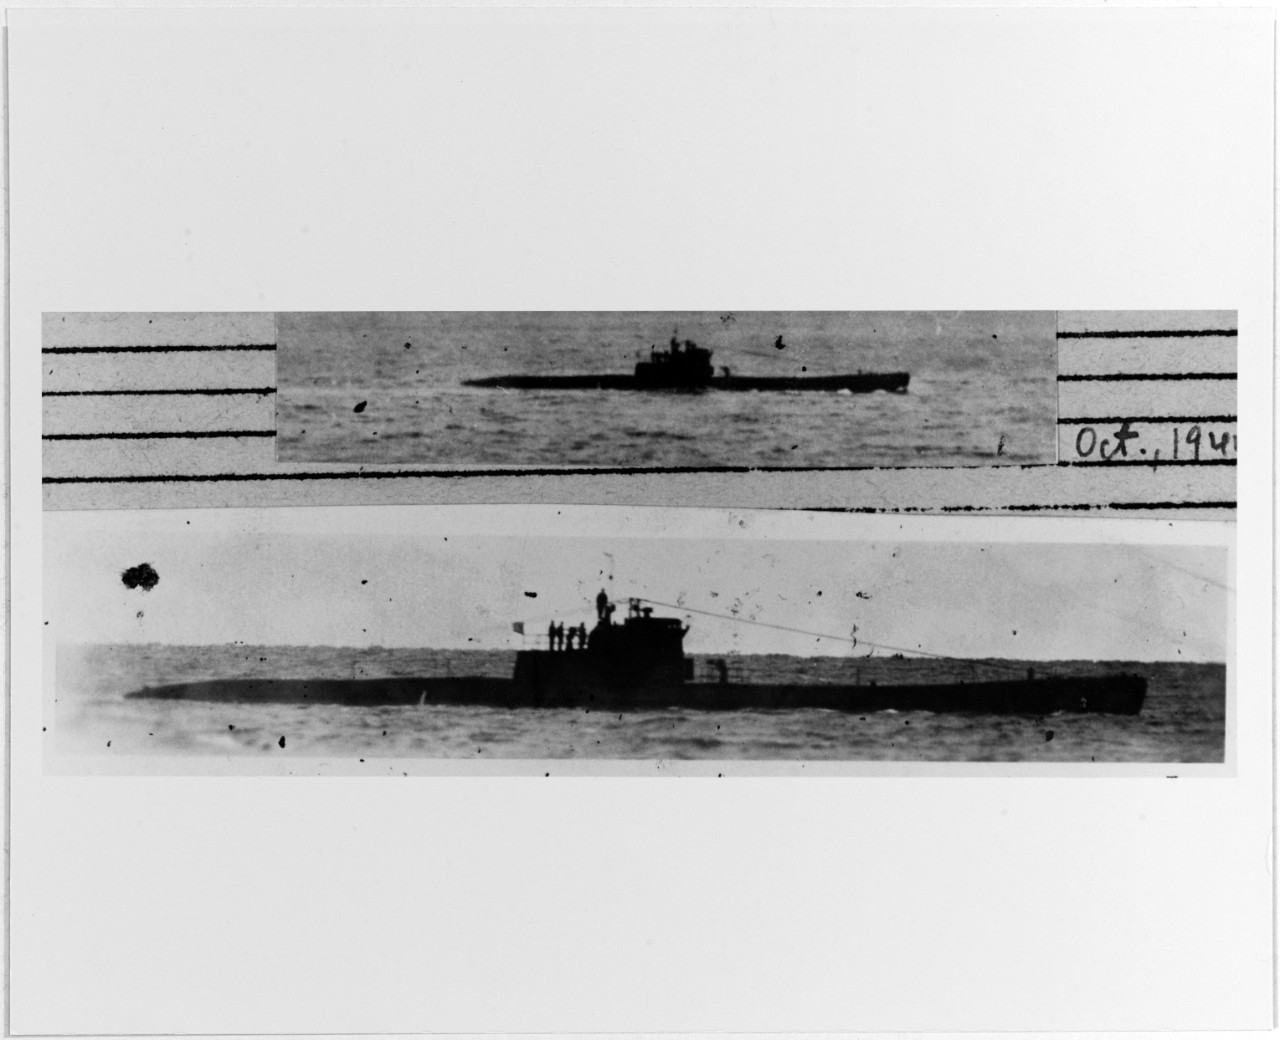 SHCH-IV Class Submarines